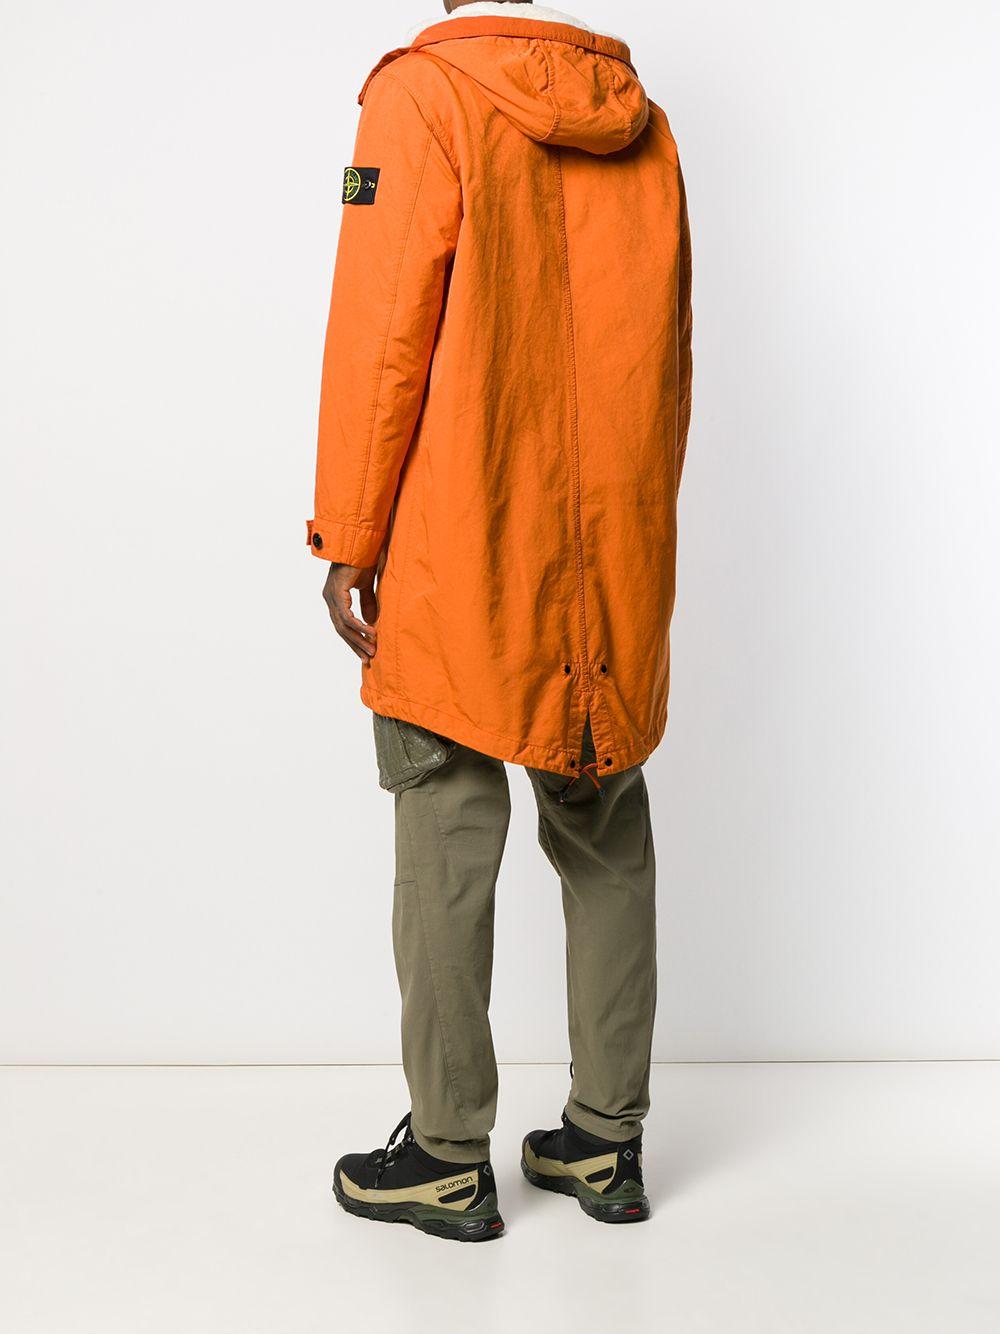 Stone Island Shearling Lined Parka Coat in Orange for Men | Lyst